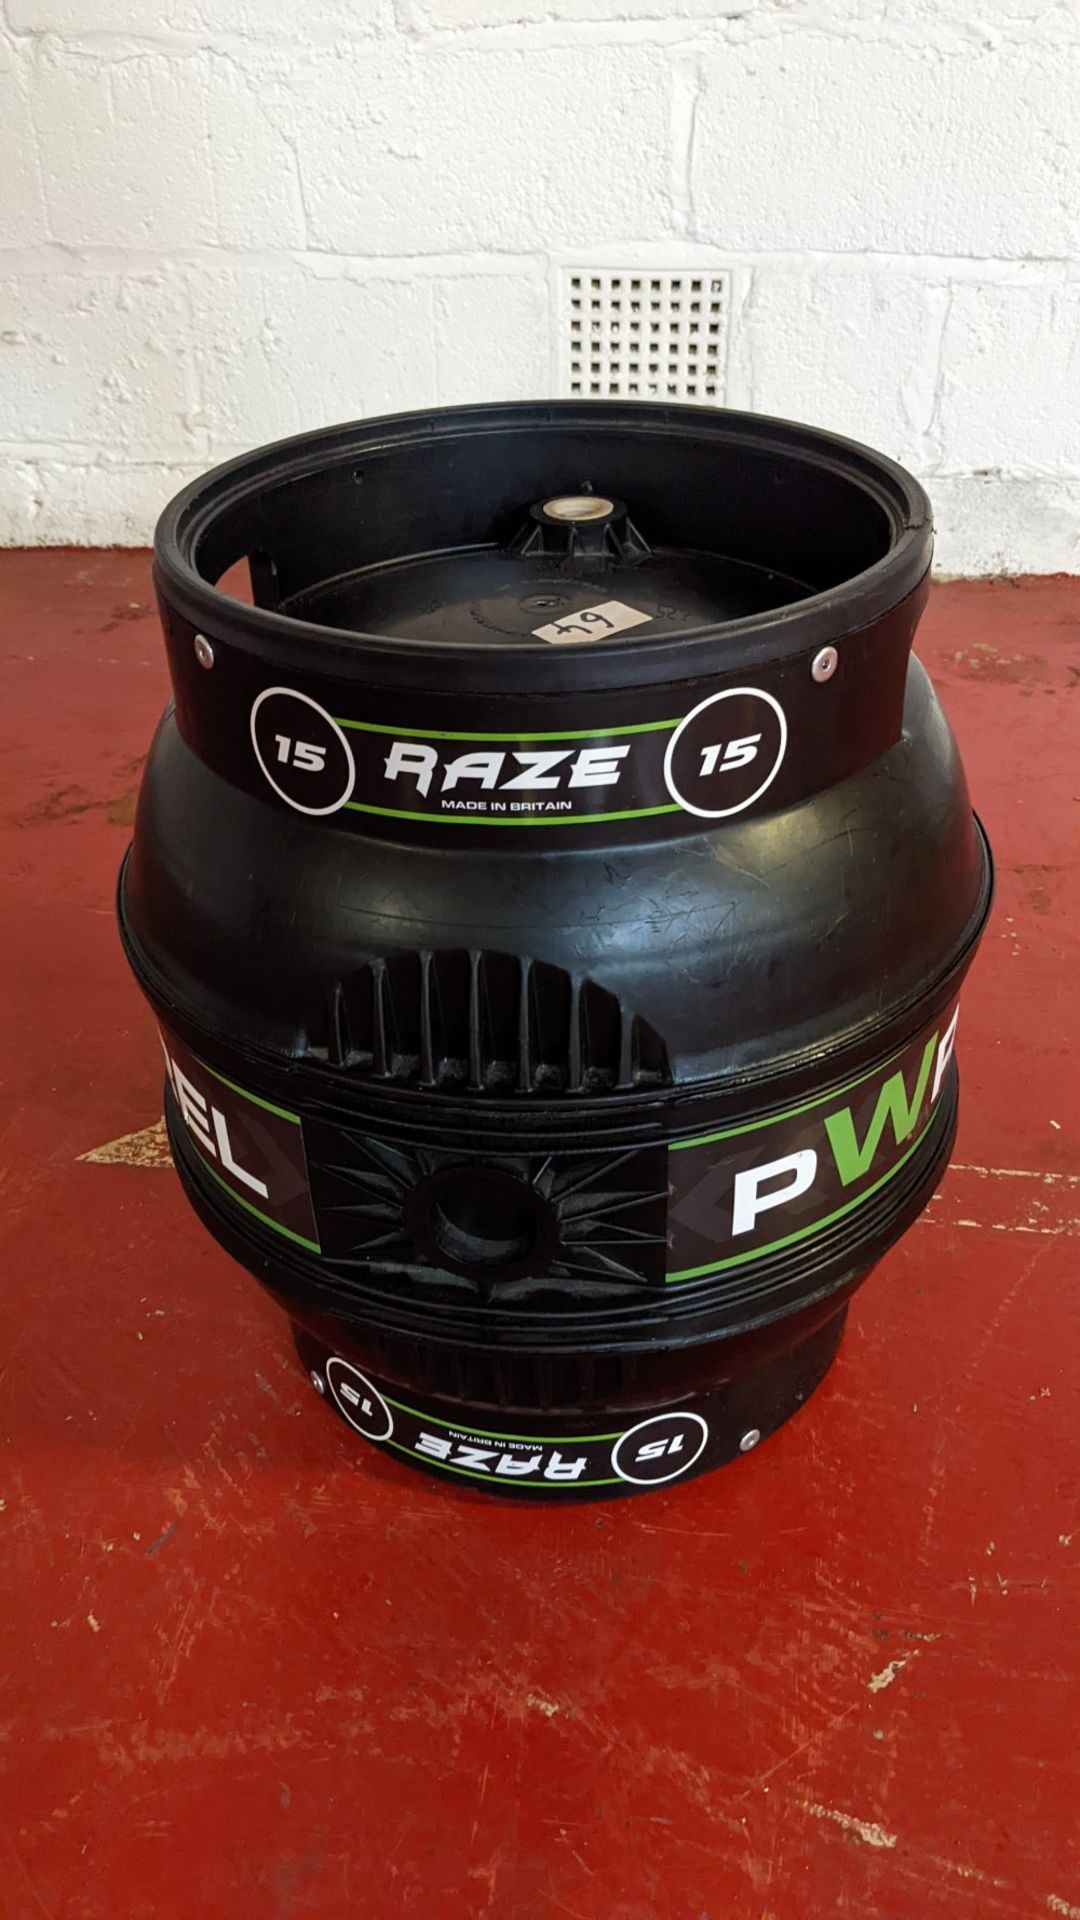 Raze 15kg Power Barrel - Image 2 of 2